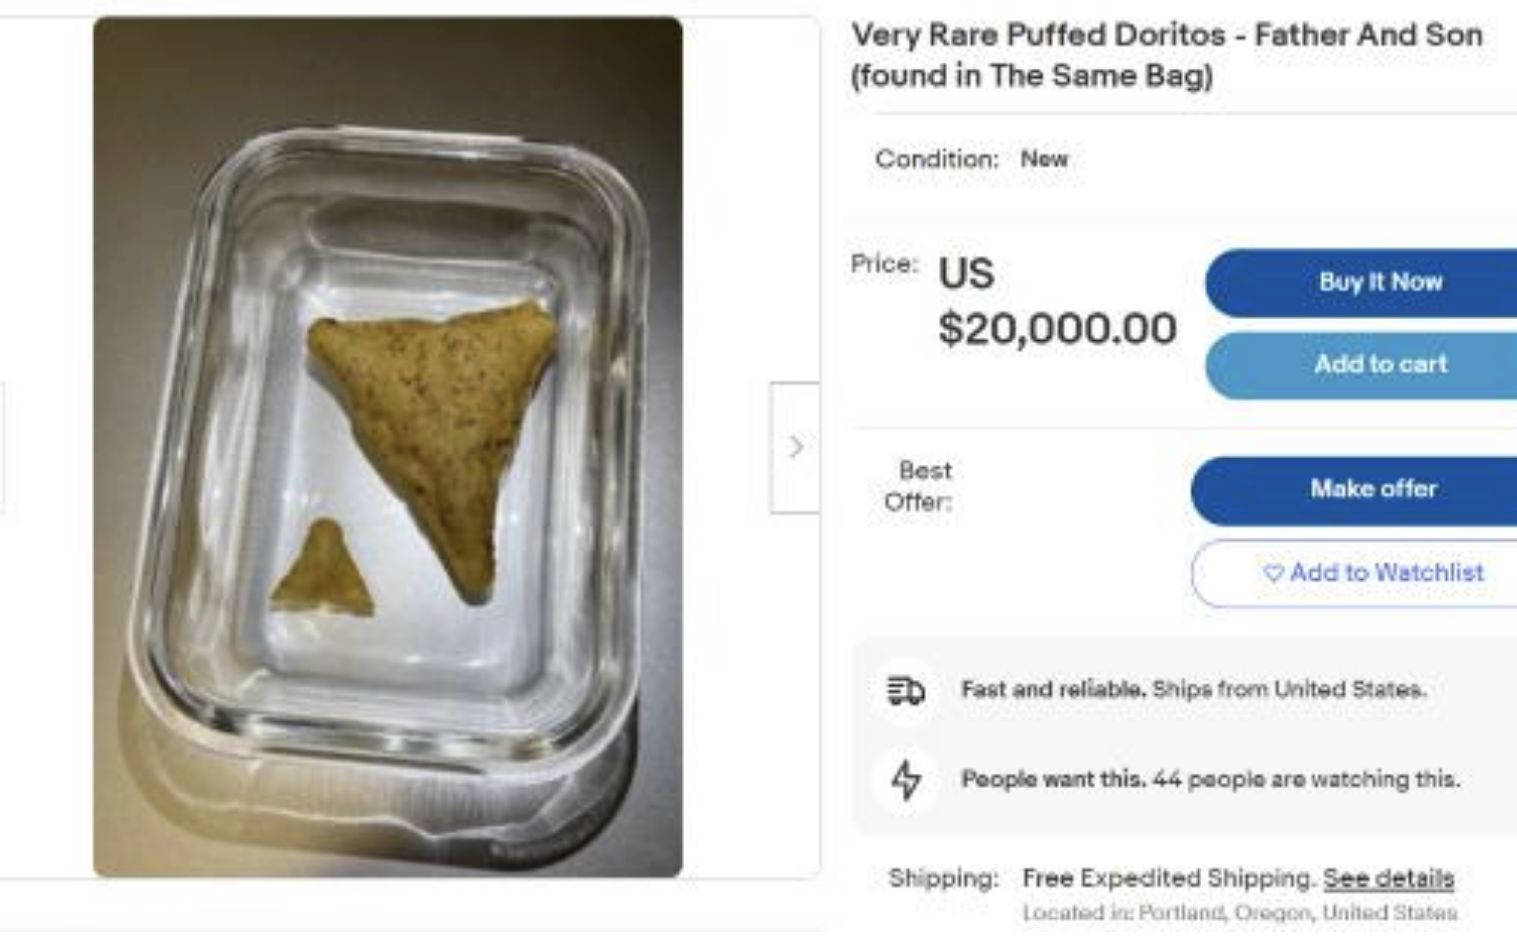 Puffed Doritos for sale